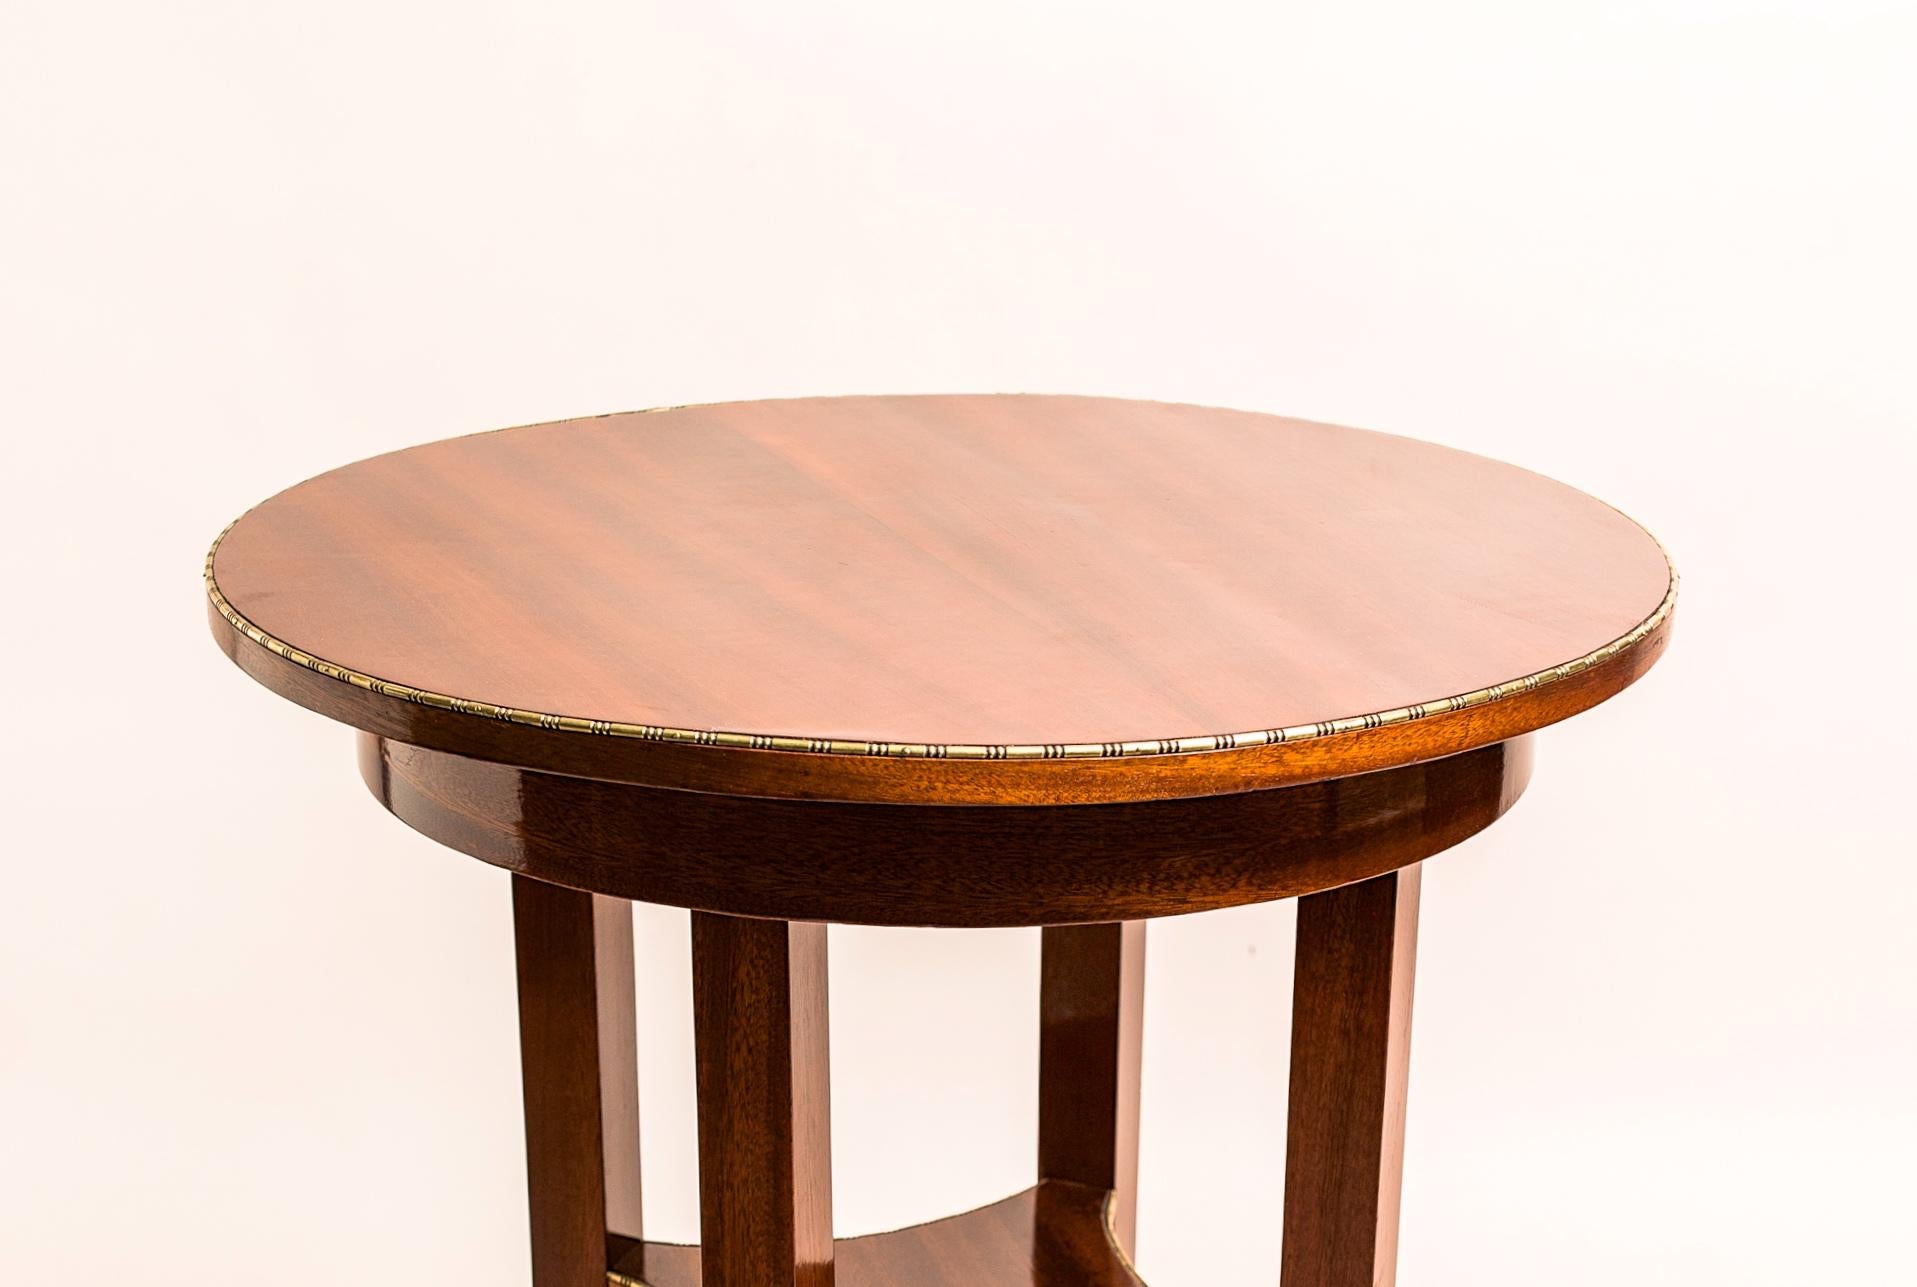 Appliqué Mahogany Side Table with Inlayed Cast Brass Edges Art Nouveau, Austria